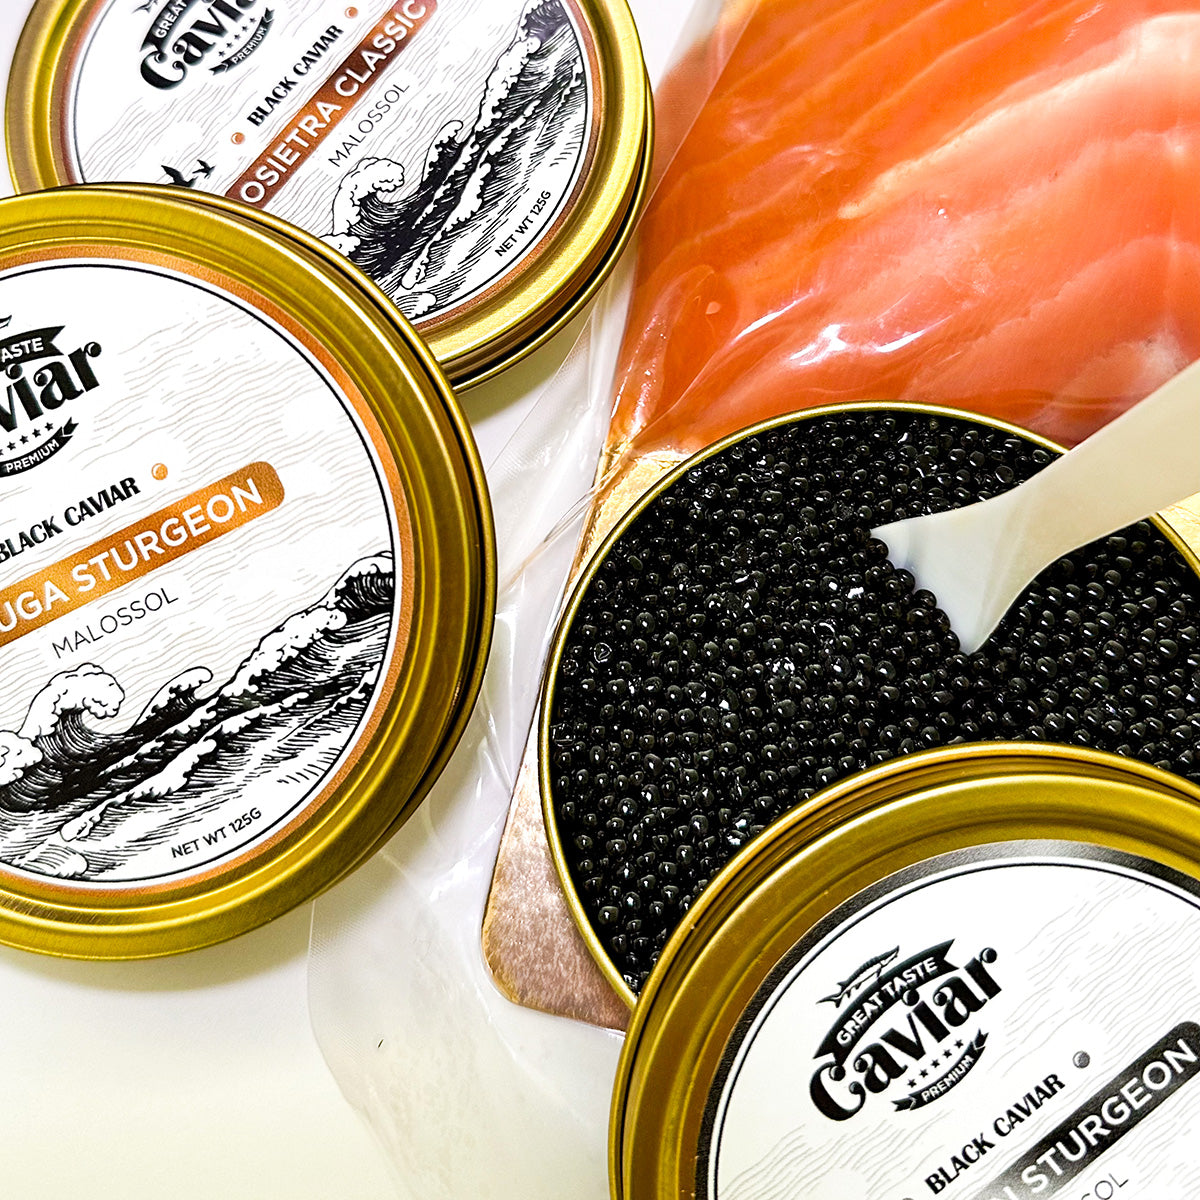 Giftset - Caviar Diversity (Small Party)